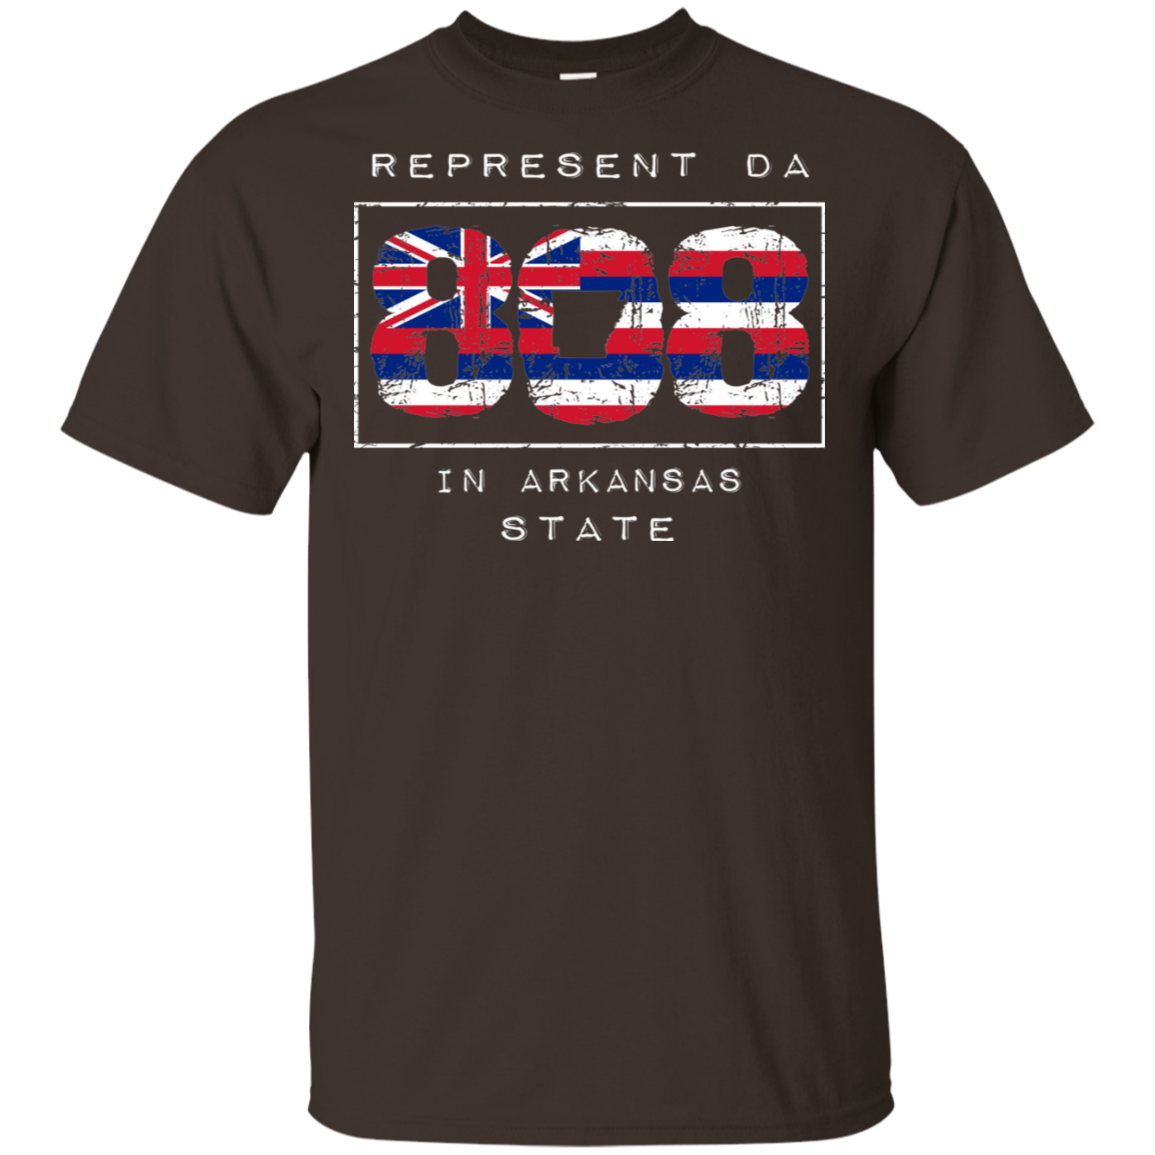 Rep Da 808 In Arkansas State Ultra Cotton T-Shirt, T-Shirts, Hawaii Nei All Day